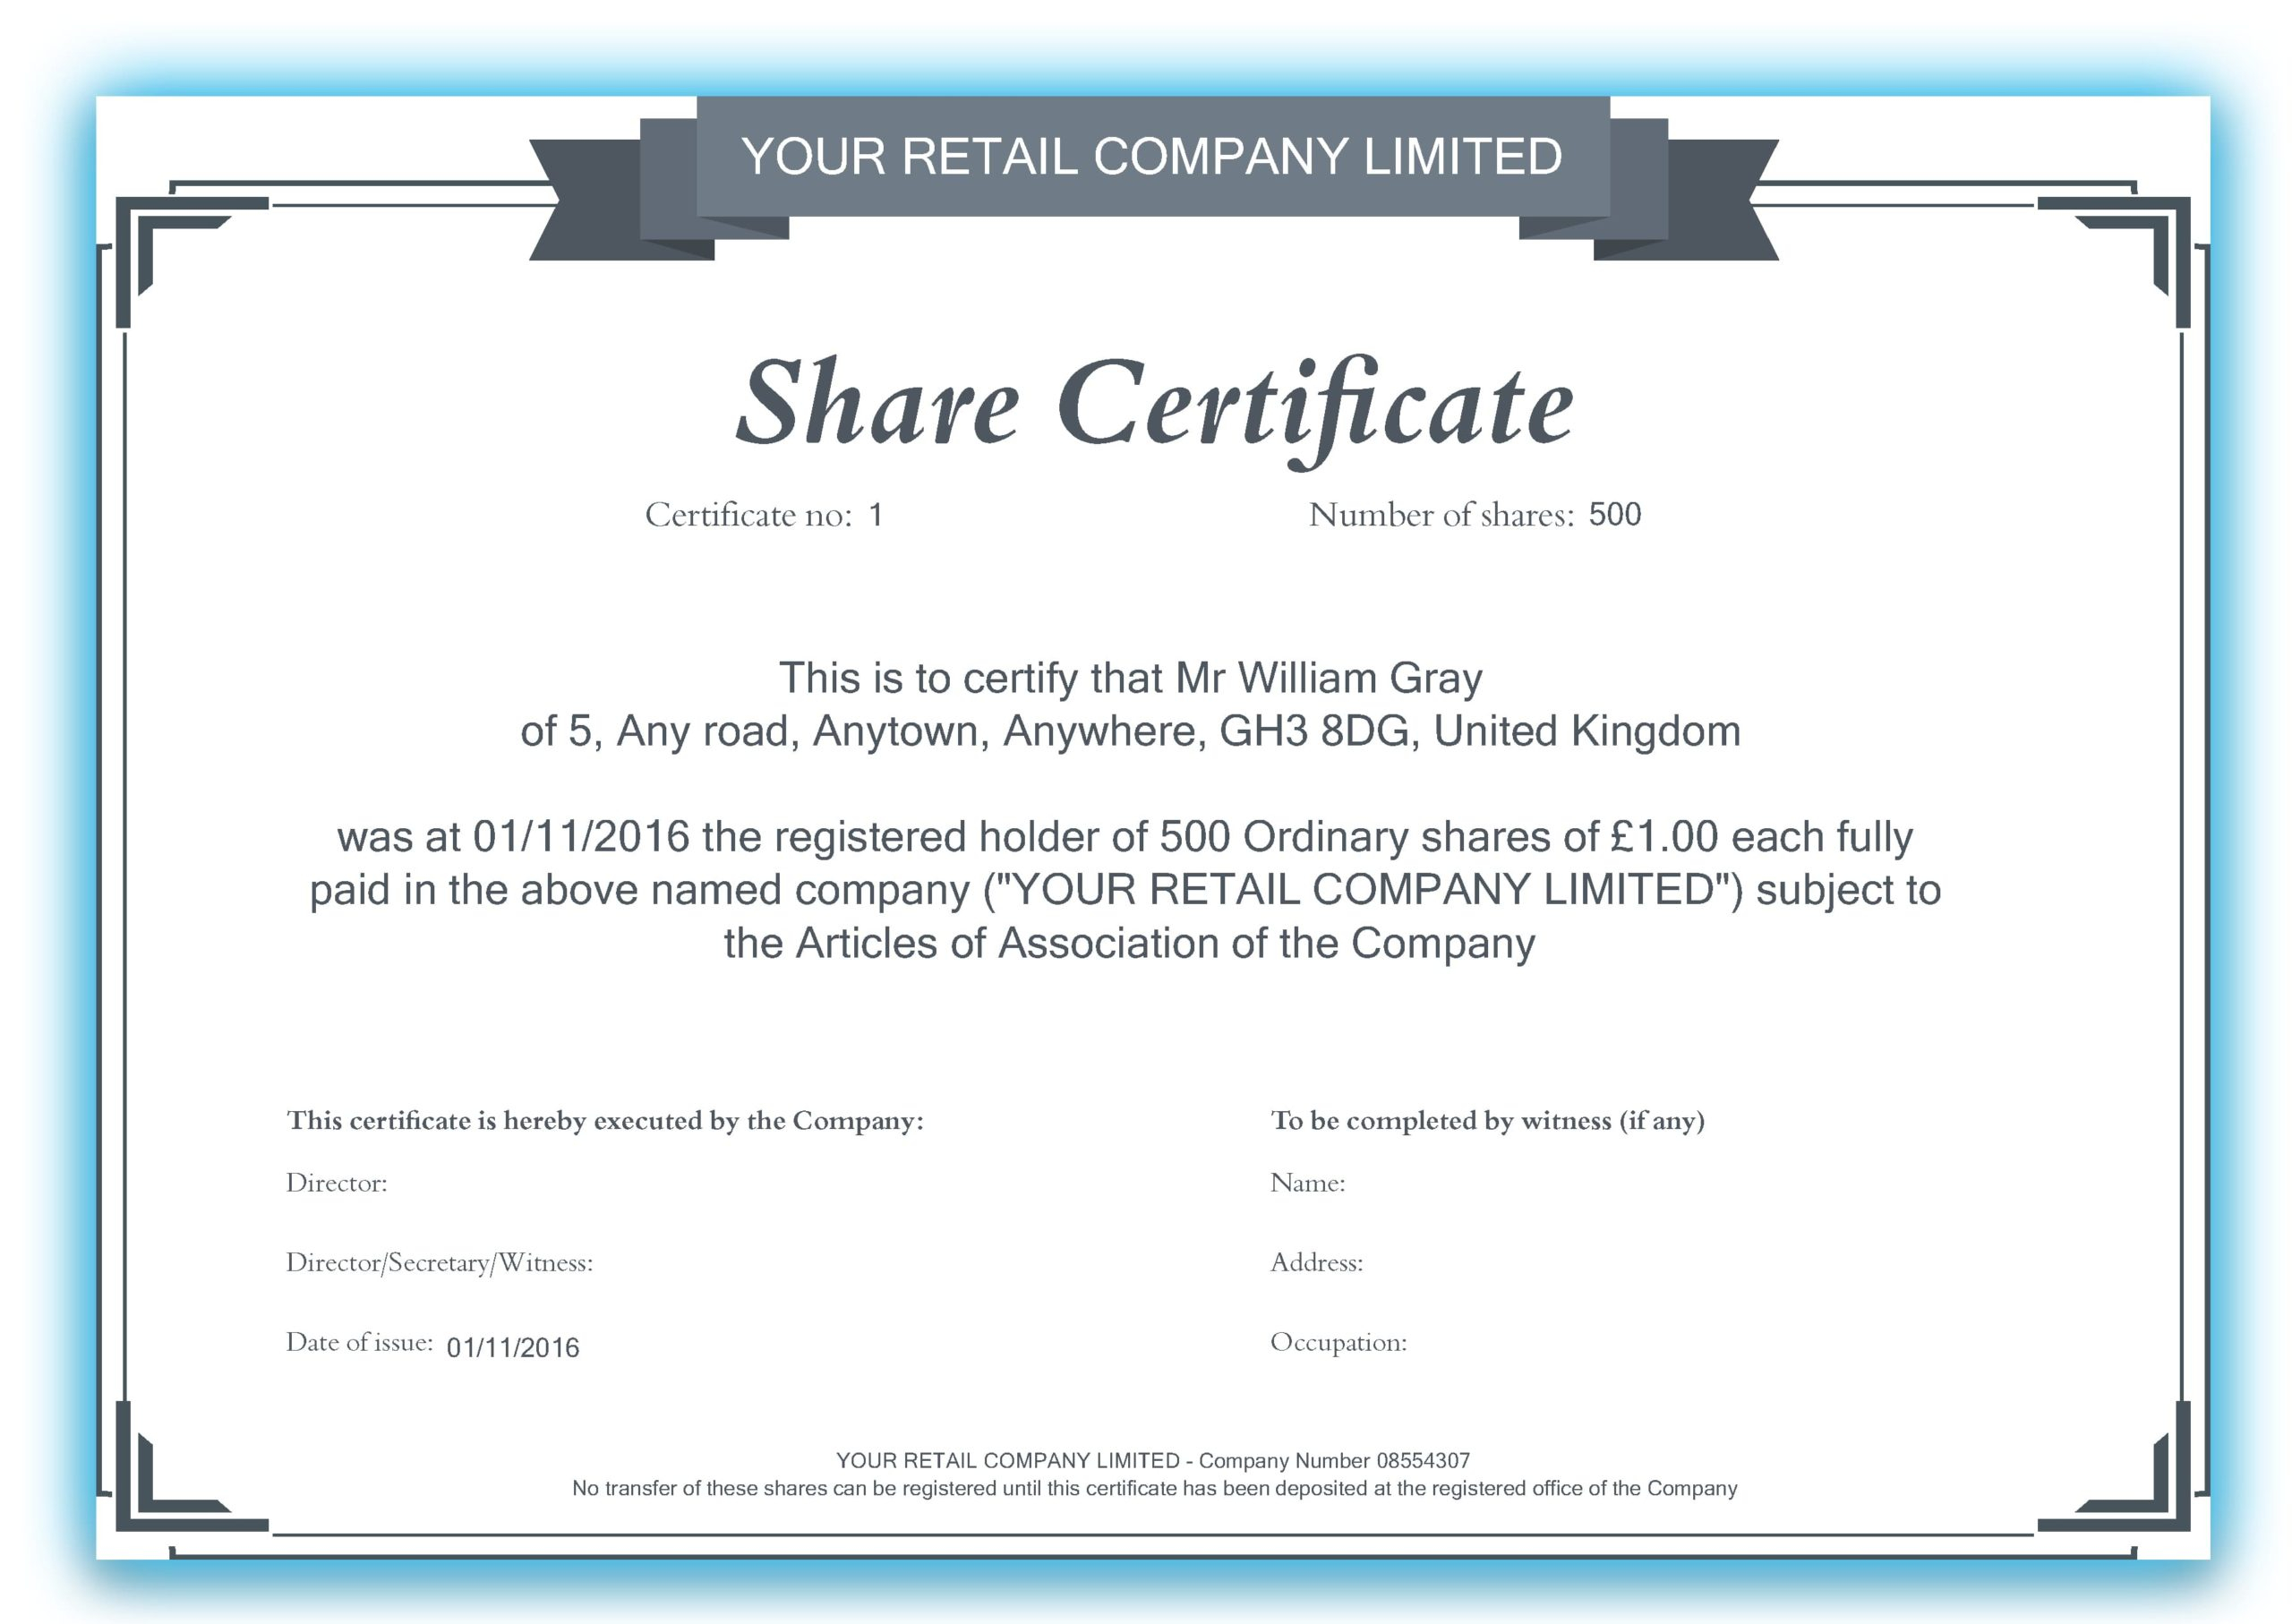 Free Share Certificate Template - Uniwide Formations Within Share Certificate Template Companies House